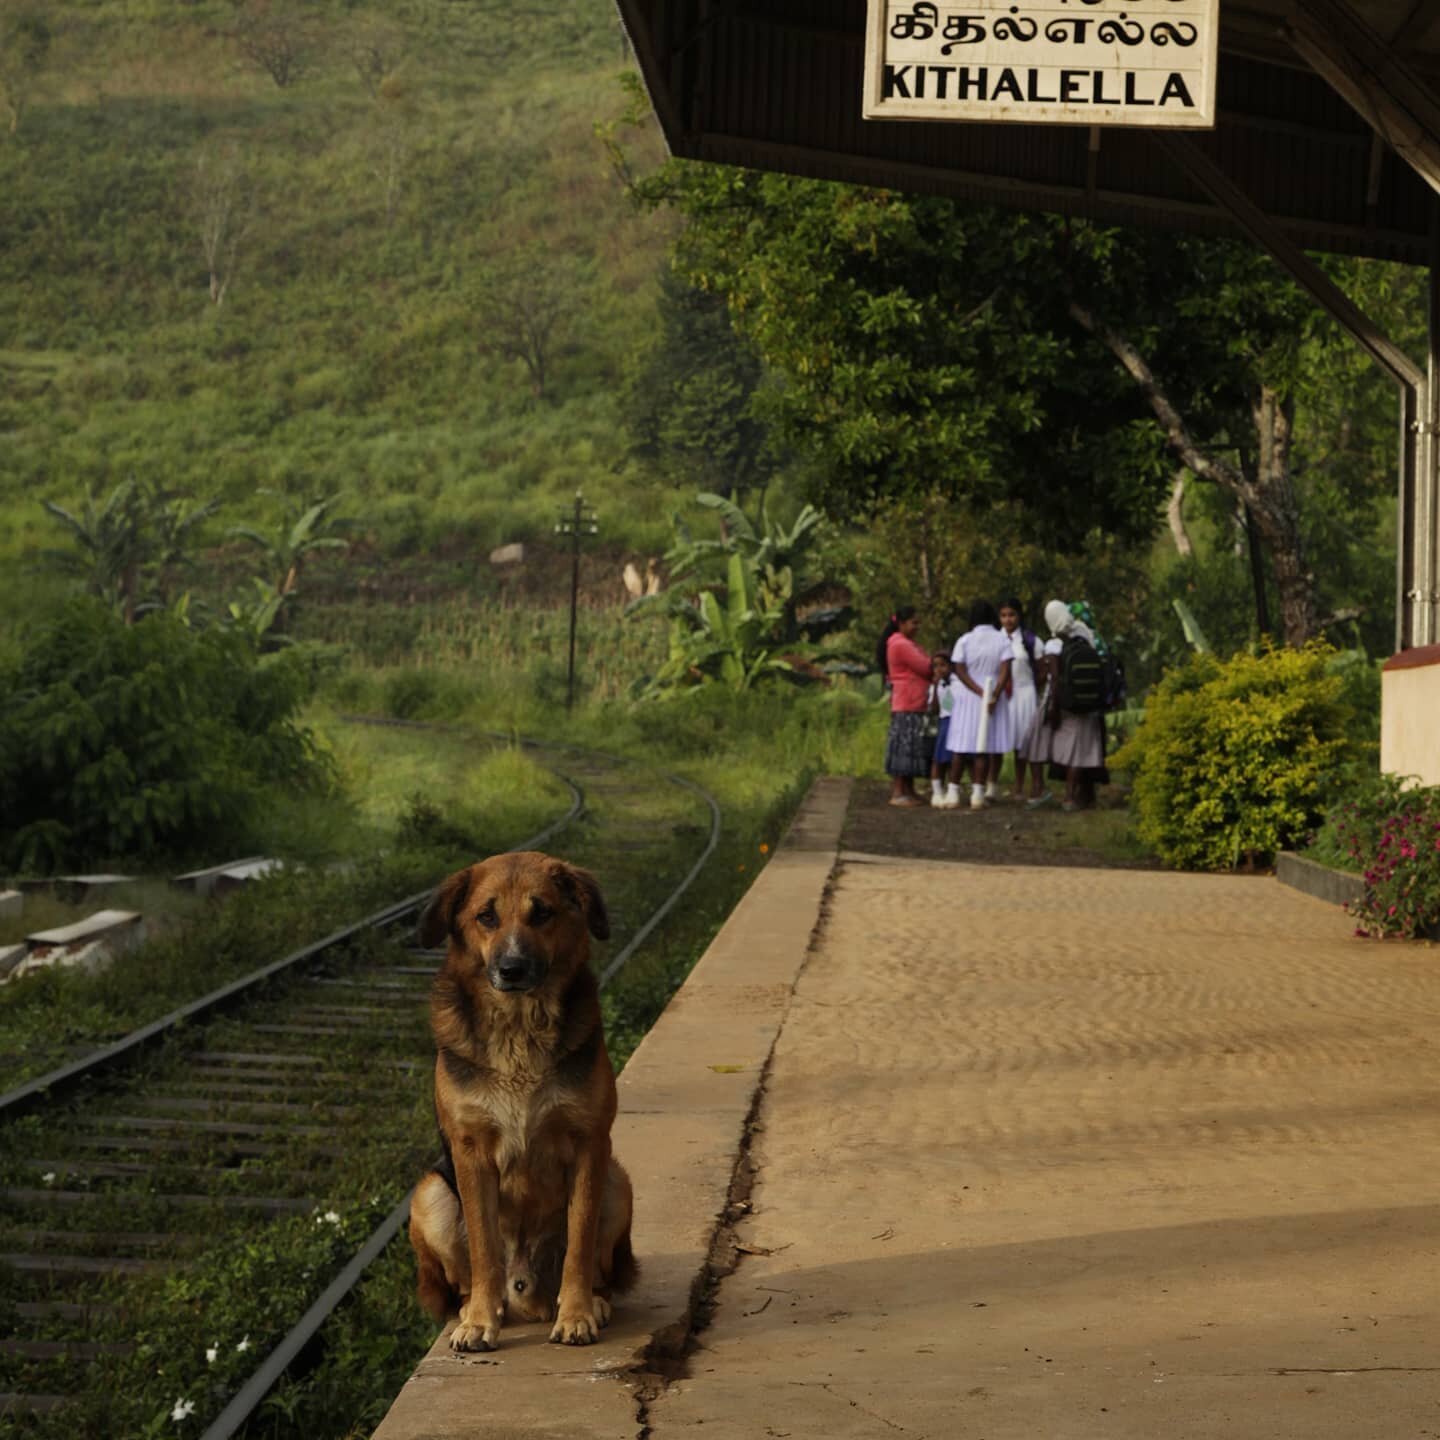 📷 Doge, where's my boss? 
🌏 Kithalella, Sri Lanka

#lptreinreizen #guardiantravelsnaps  #lpopavontuur #reportagespotlight #srilanka #trainstation #srilankatravel #srilankadaily #asianwanderlust #discoverasia #noicemag  #eindevandewereld #lpfanphoto